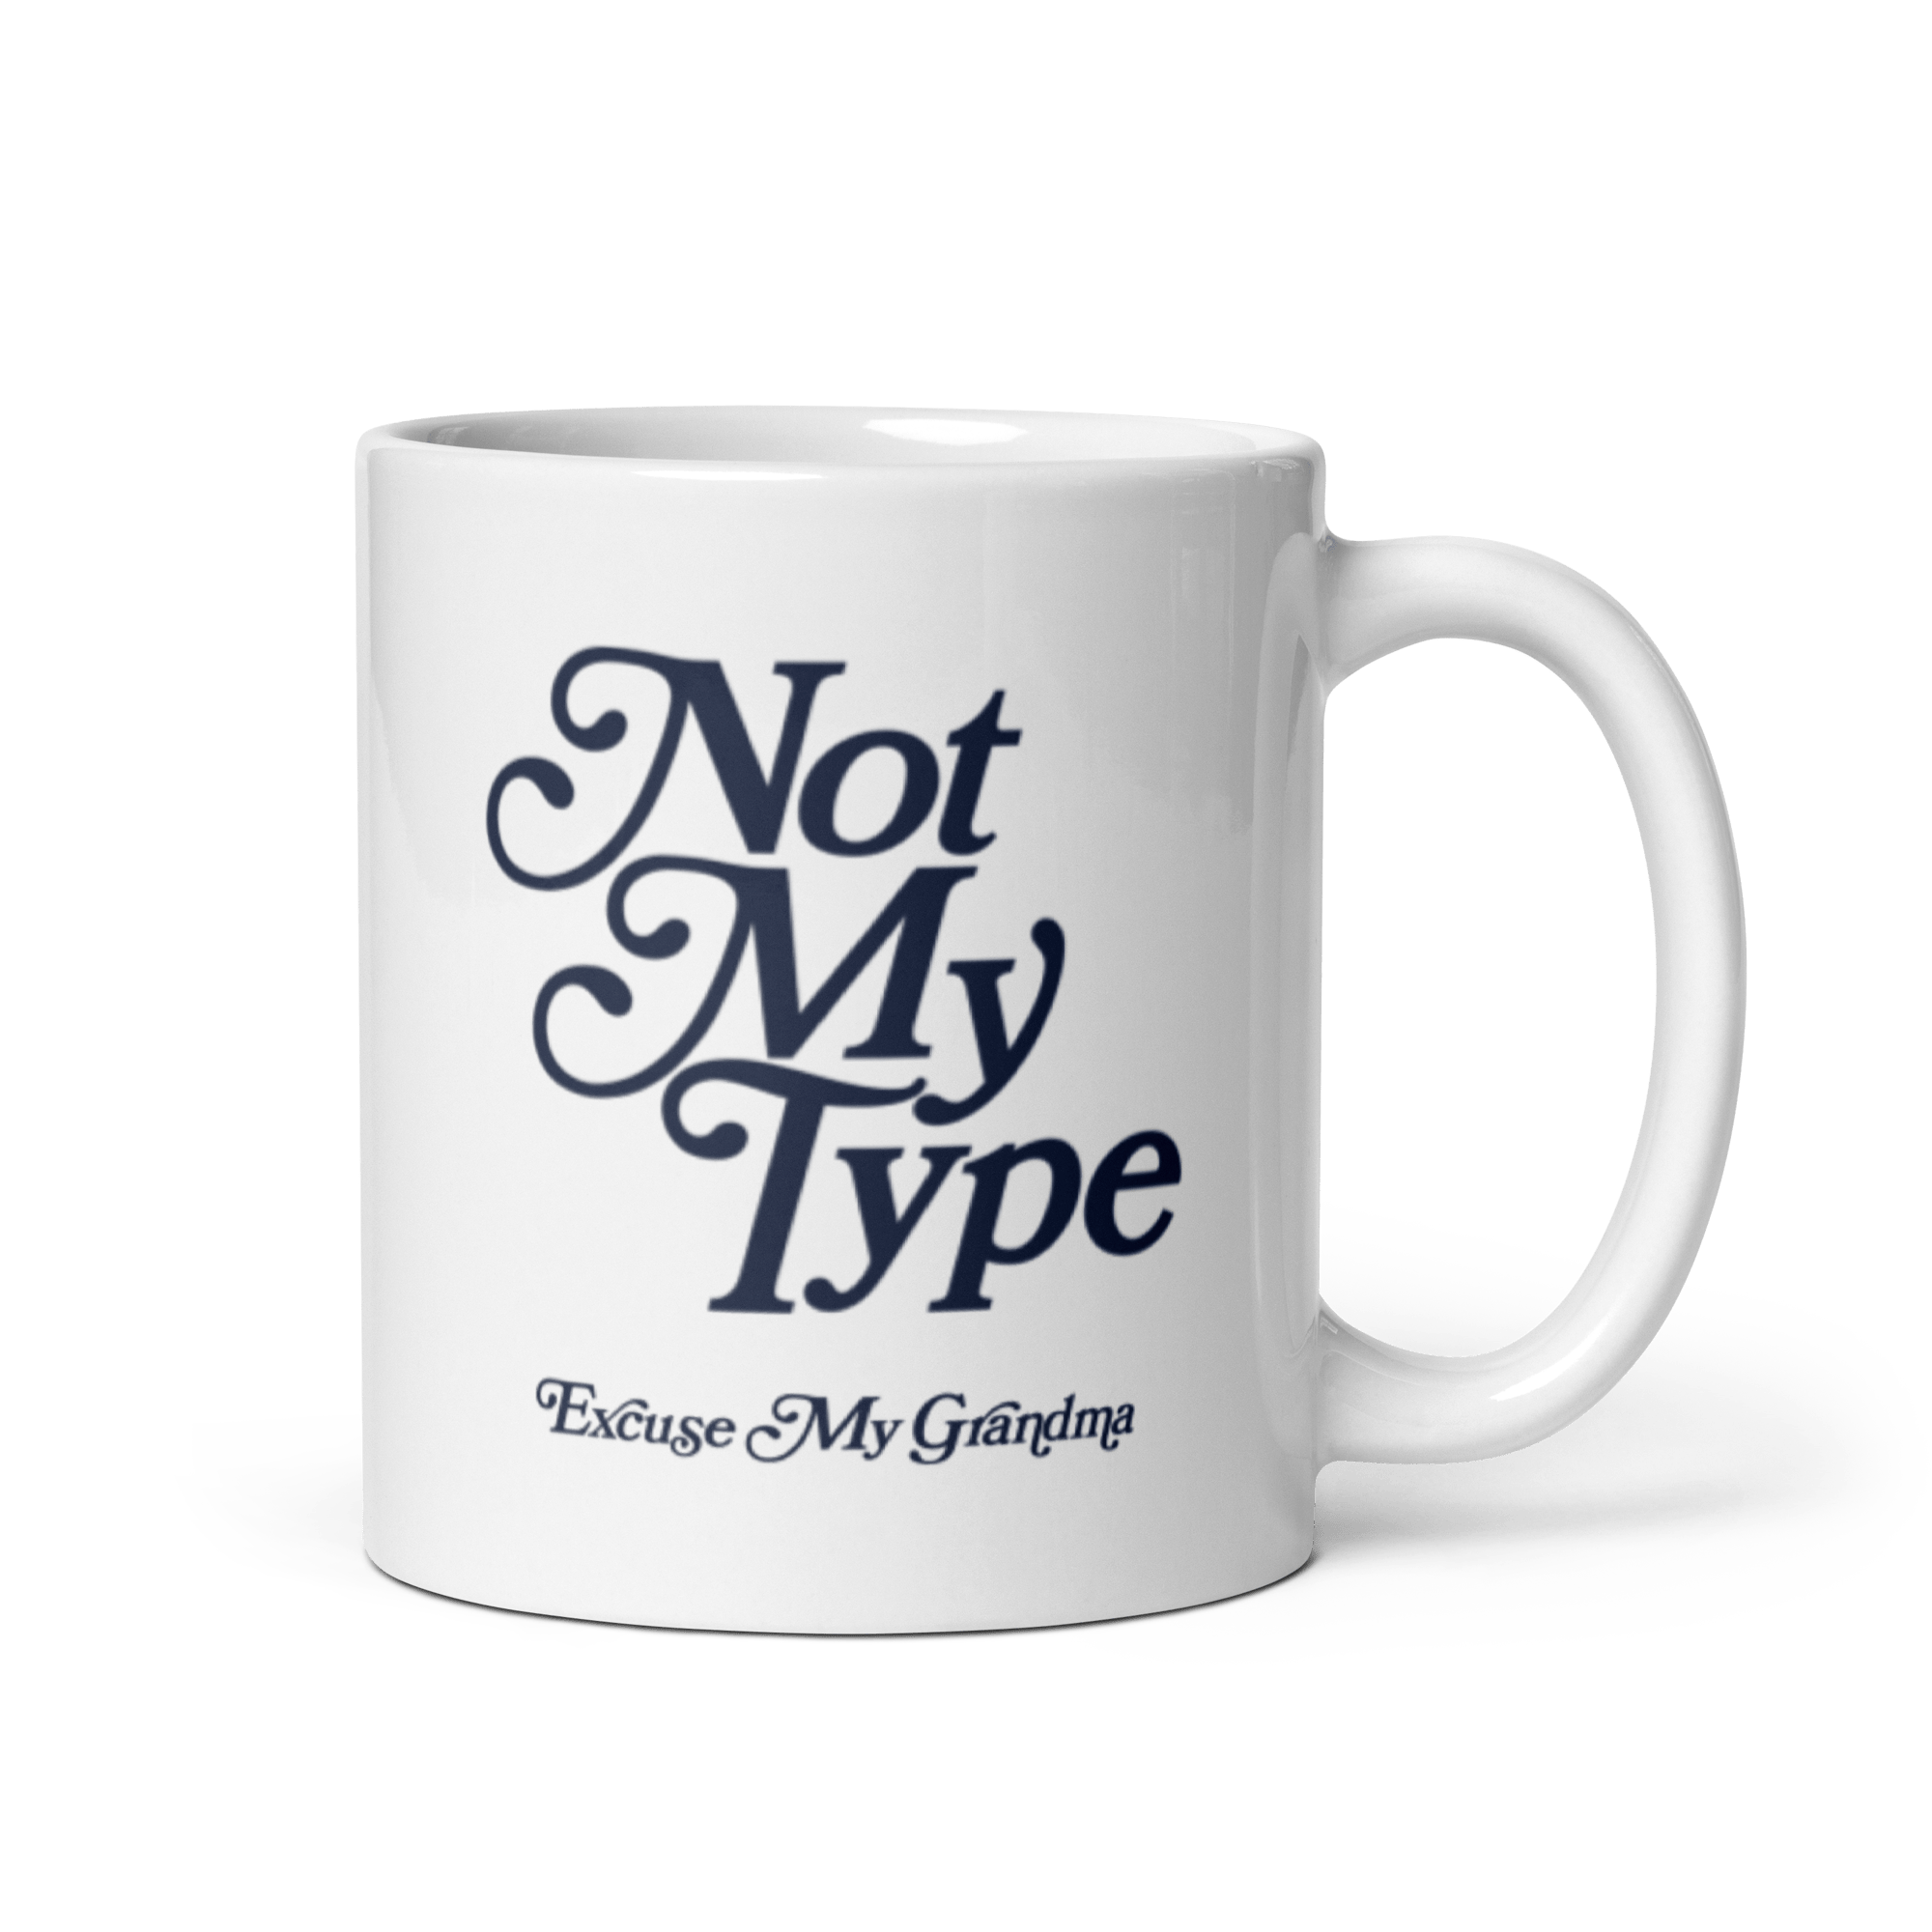 Not My Type Mug - Excuse My Grandma